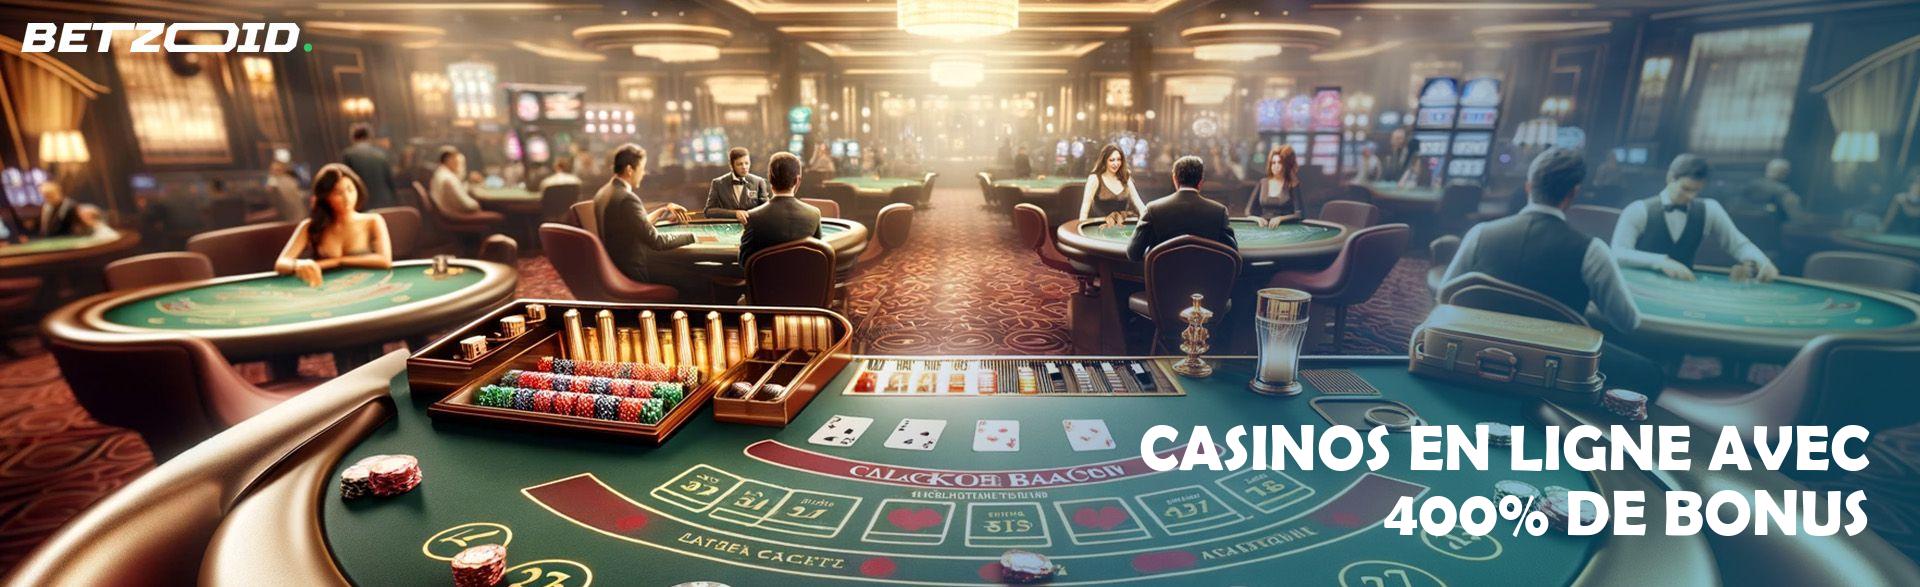 Casinos en Ligne avec 400% de Bonus.